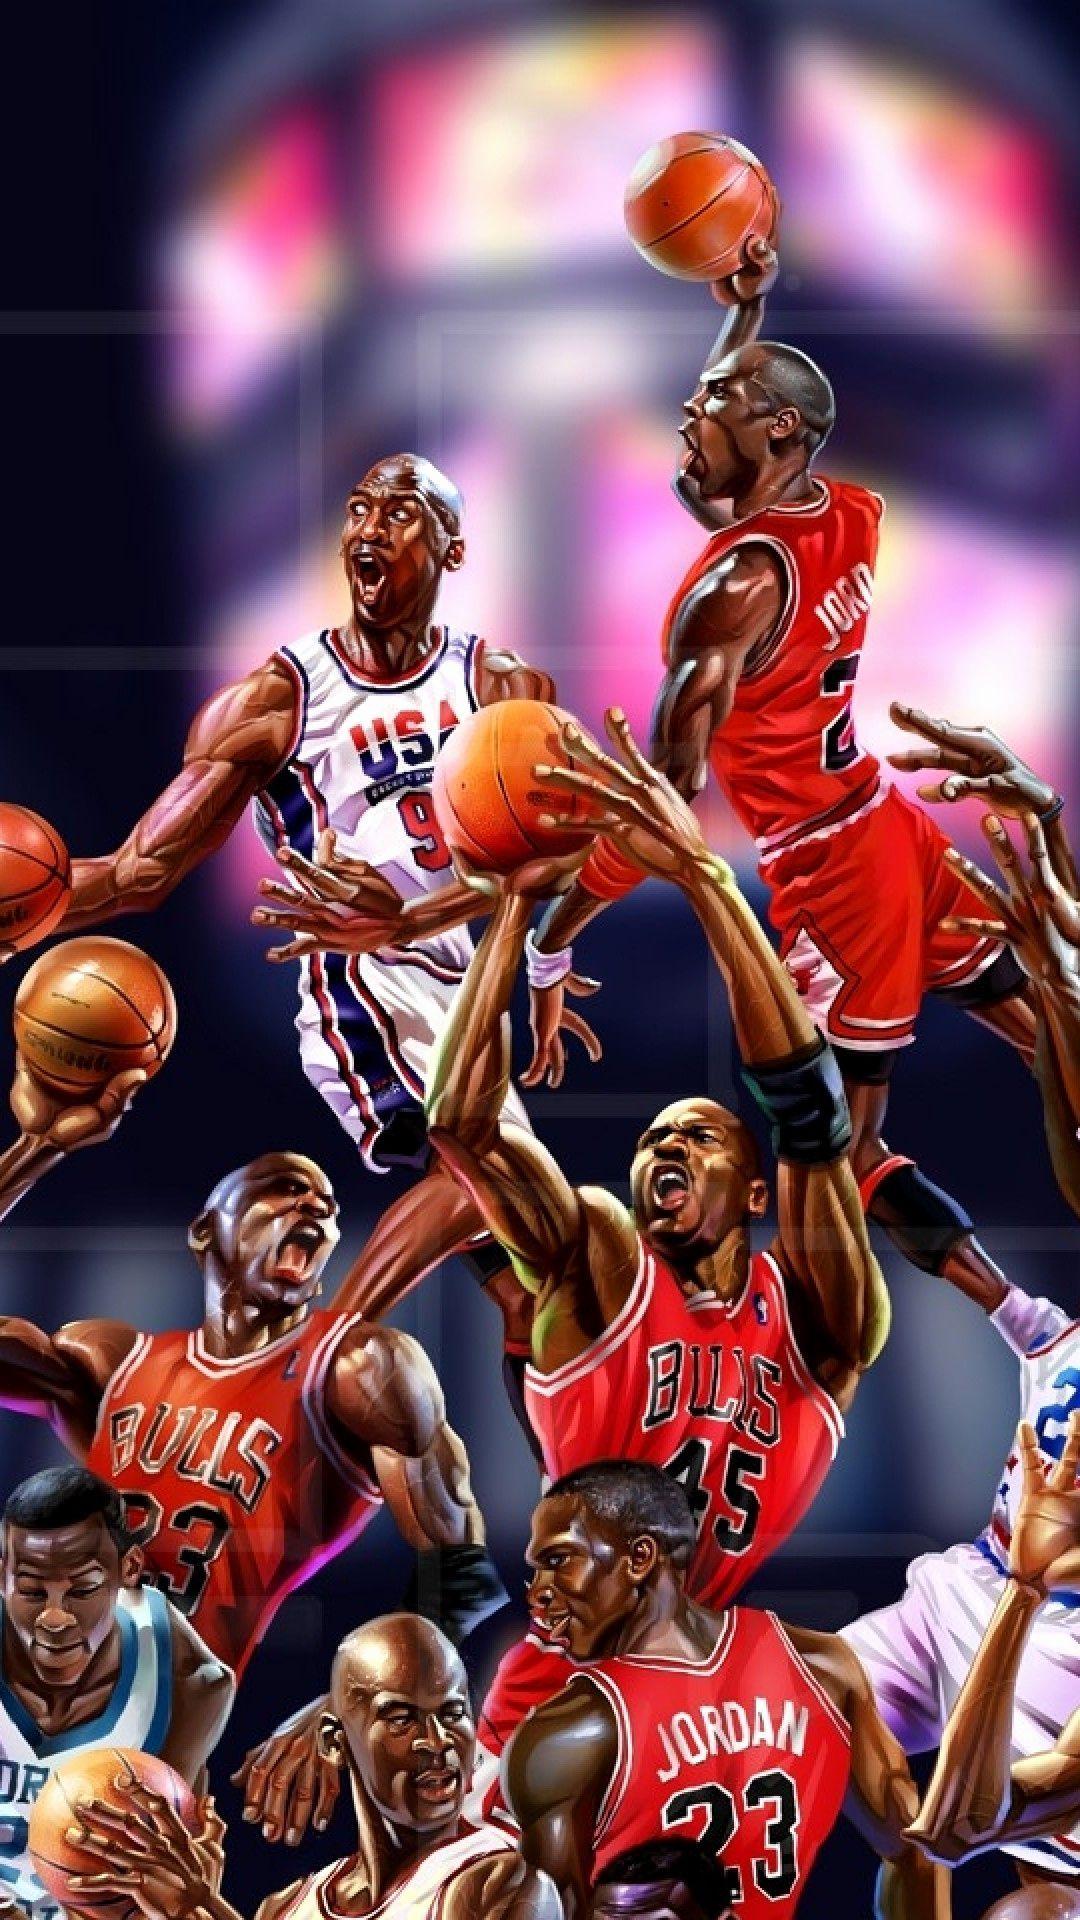 49 Cool Basketball Wallpapers for iPhone  WallpaperSafari